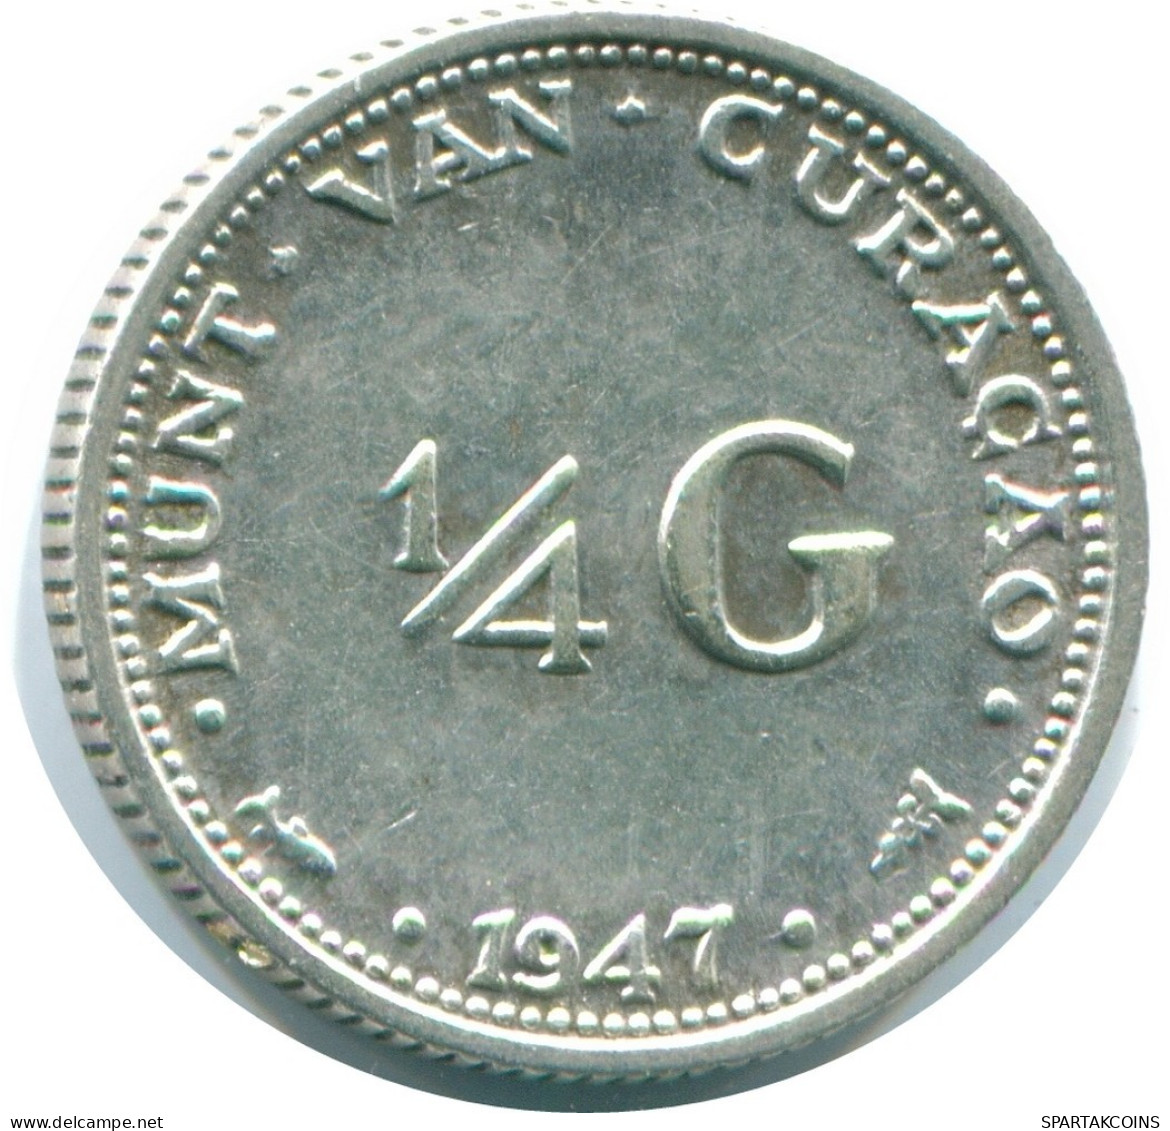 1/4 GULDEN 1947 CURACAO Netherlands SILVER Colonial Coin #NL10766.4.U.A - Curacao